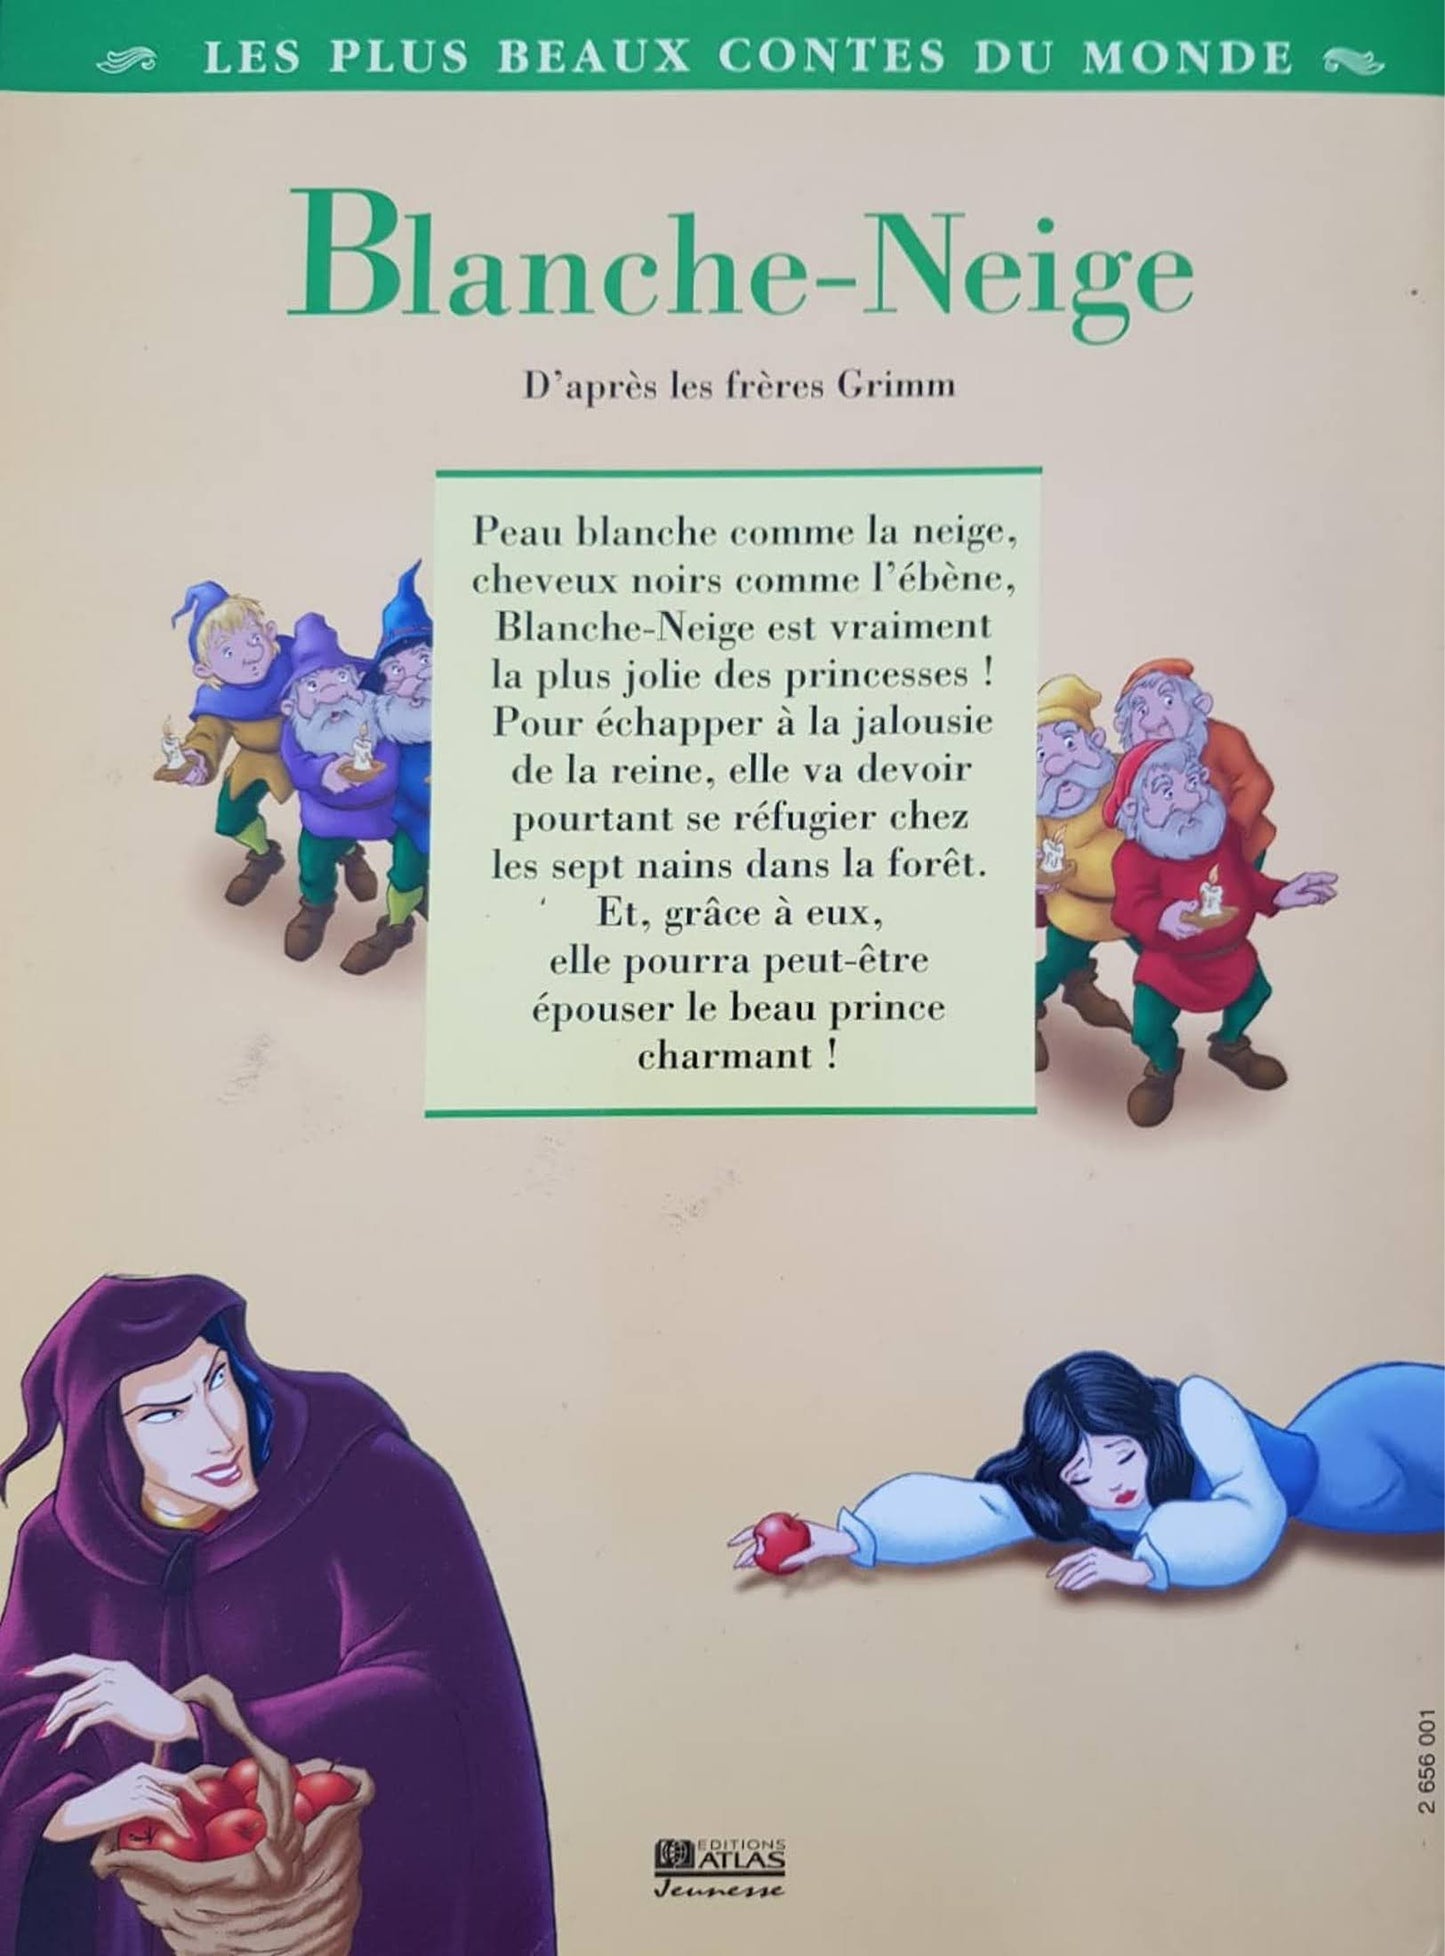 Blanche-Neige raconté par Marlène Jobert Very Good Marlène Jobert  (6259844677817)